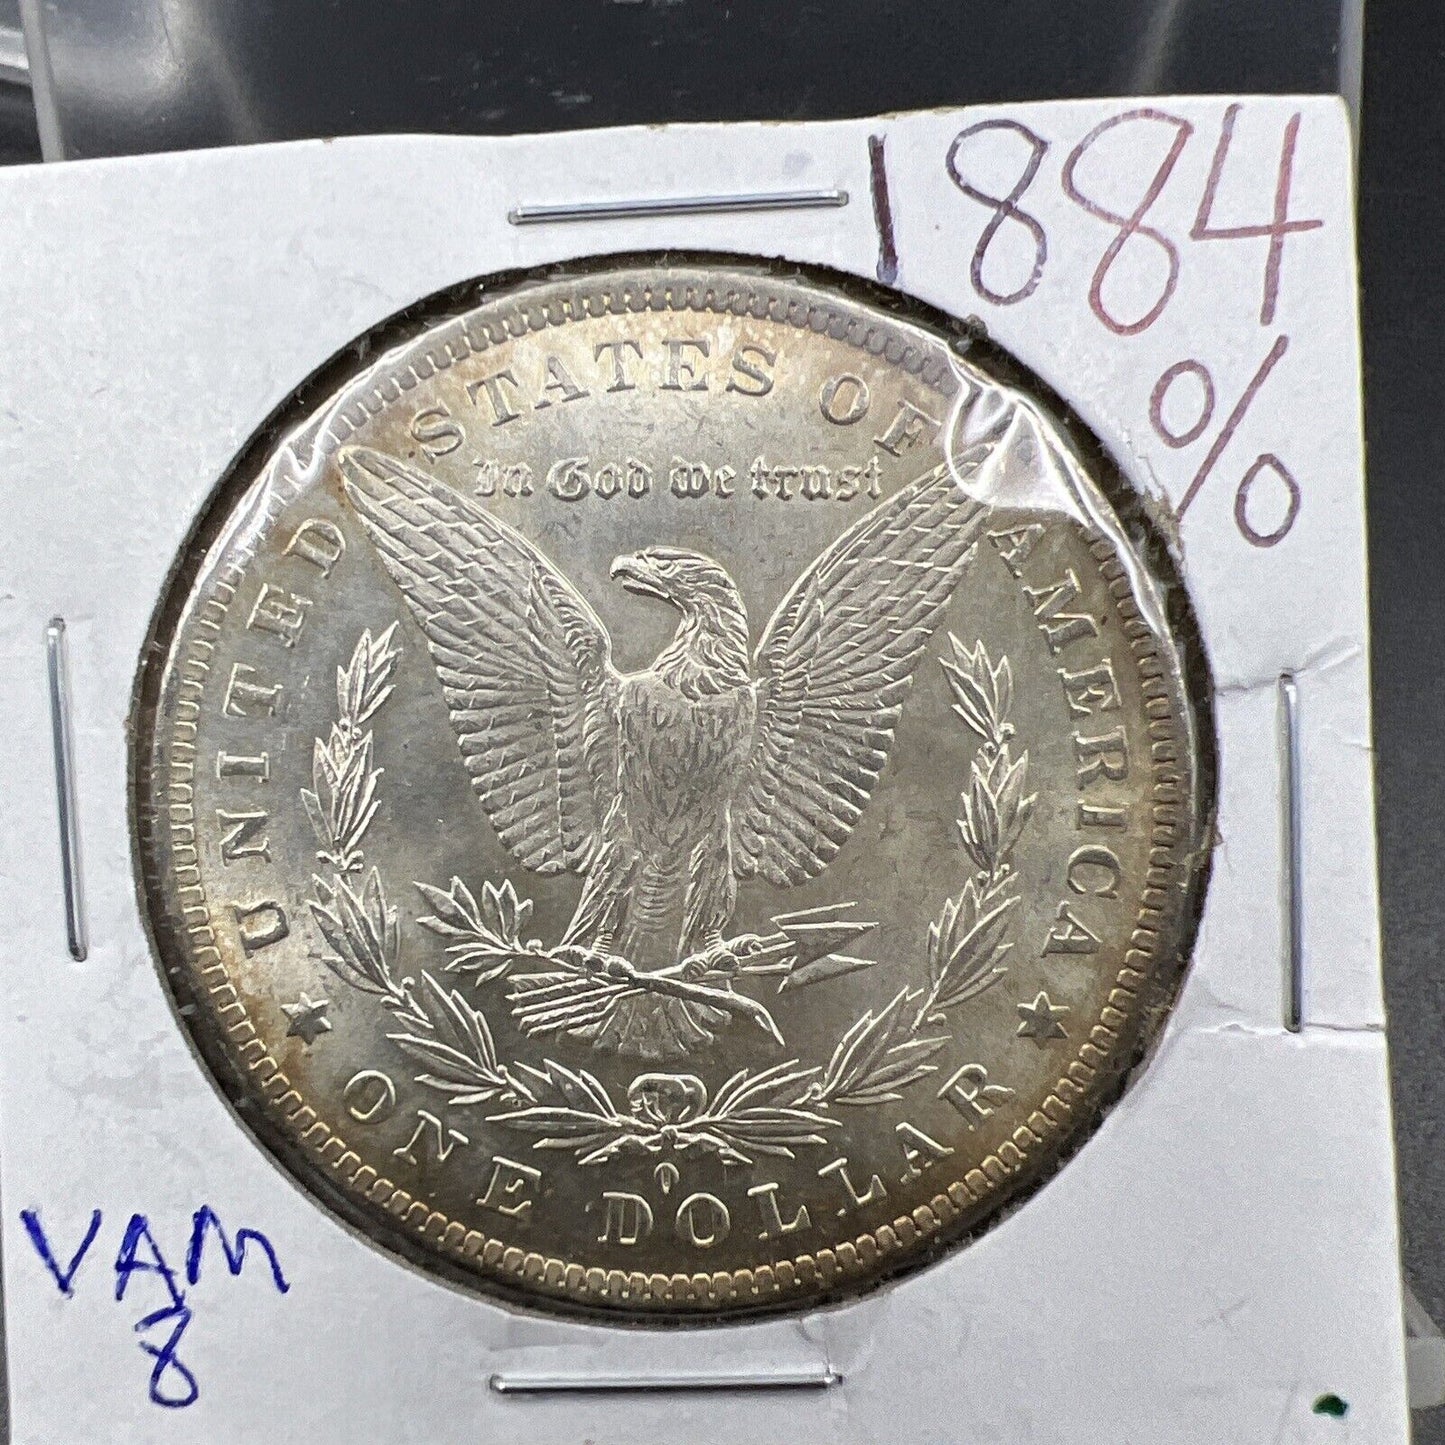 1884 O Morgan Dollar Coin O/O Vam 8 OMM Overlap Reeding Die Chips CH BU Variety